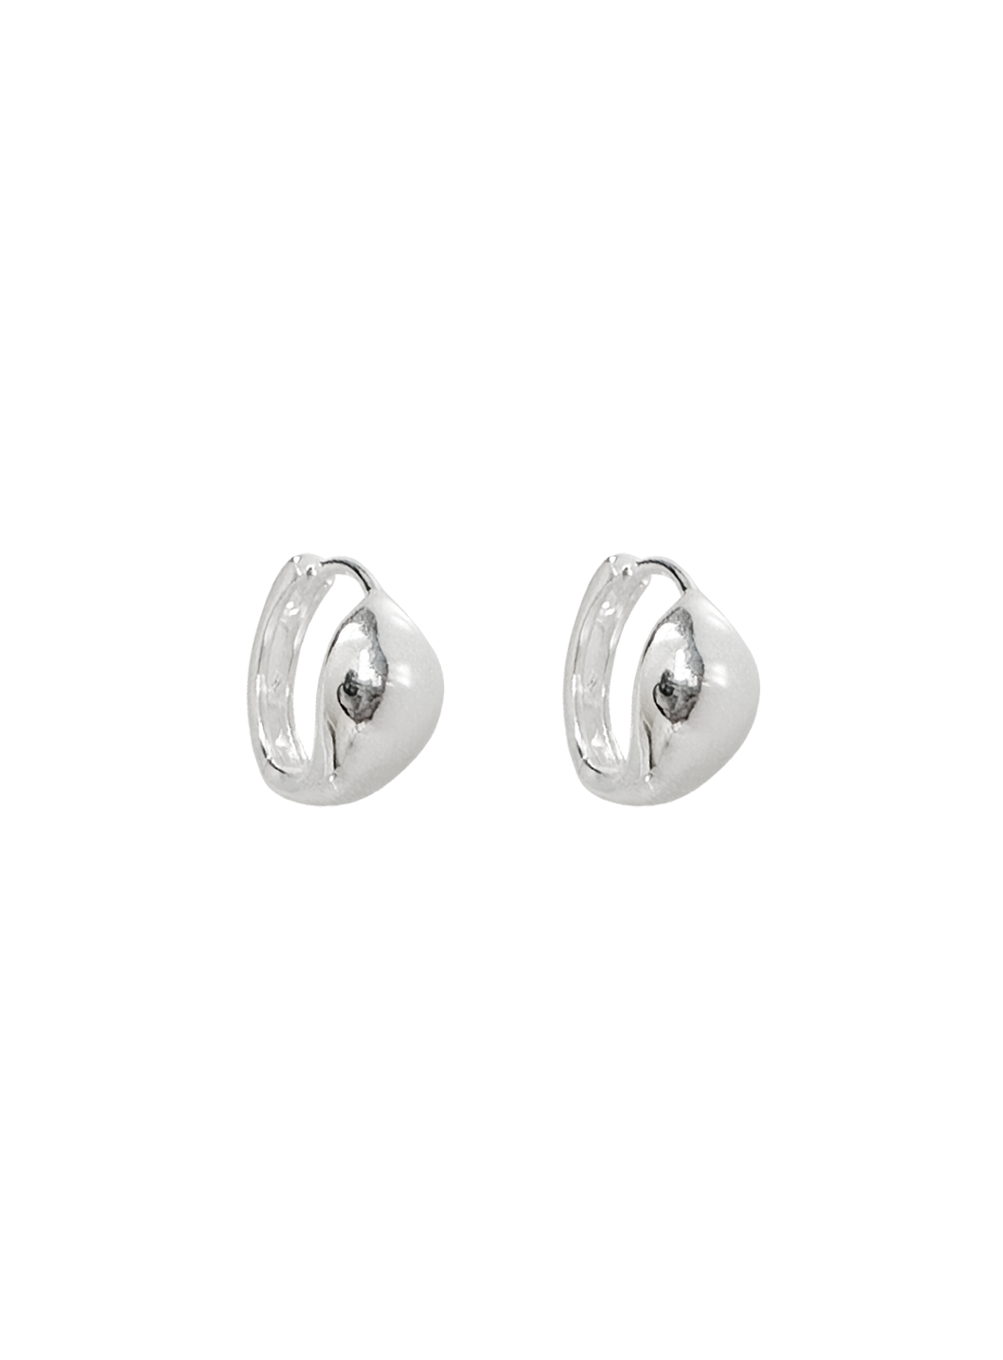 Water drop Ring earrings